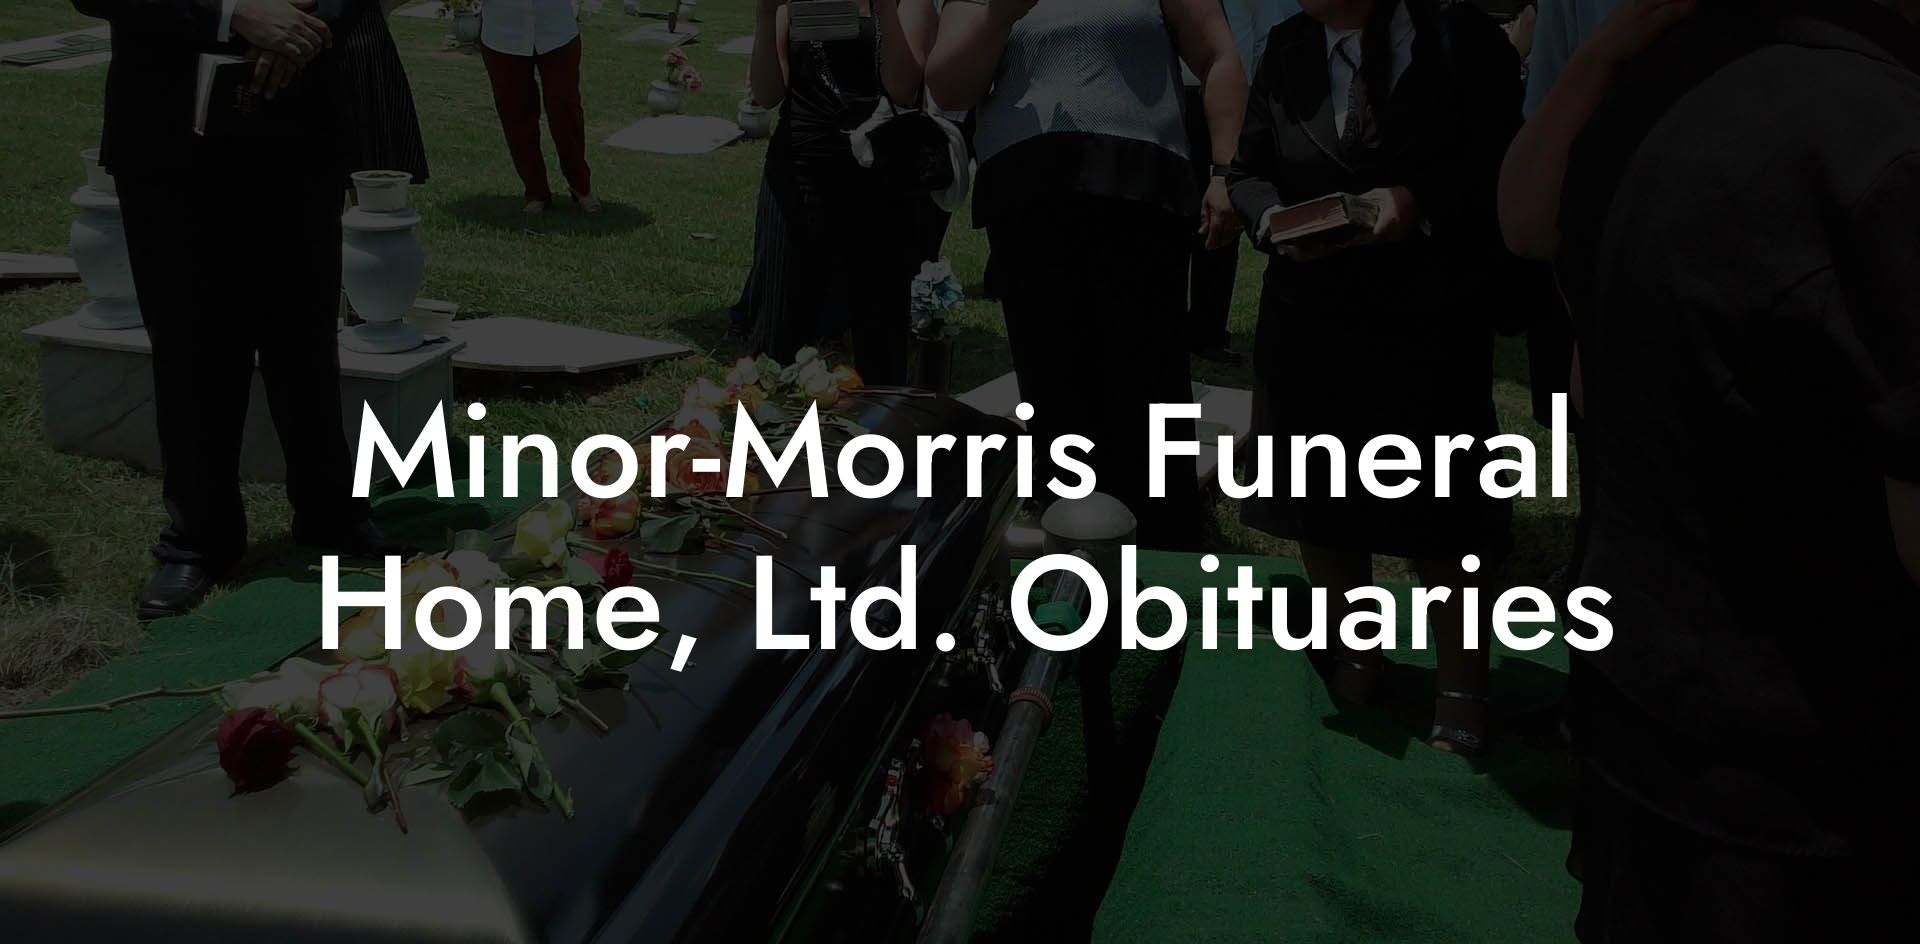 Minor-Morris Funeral Home, Ltd. Obituaries